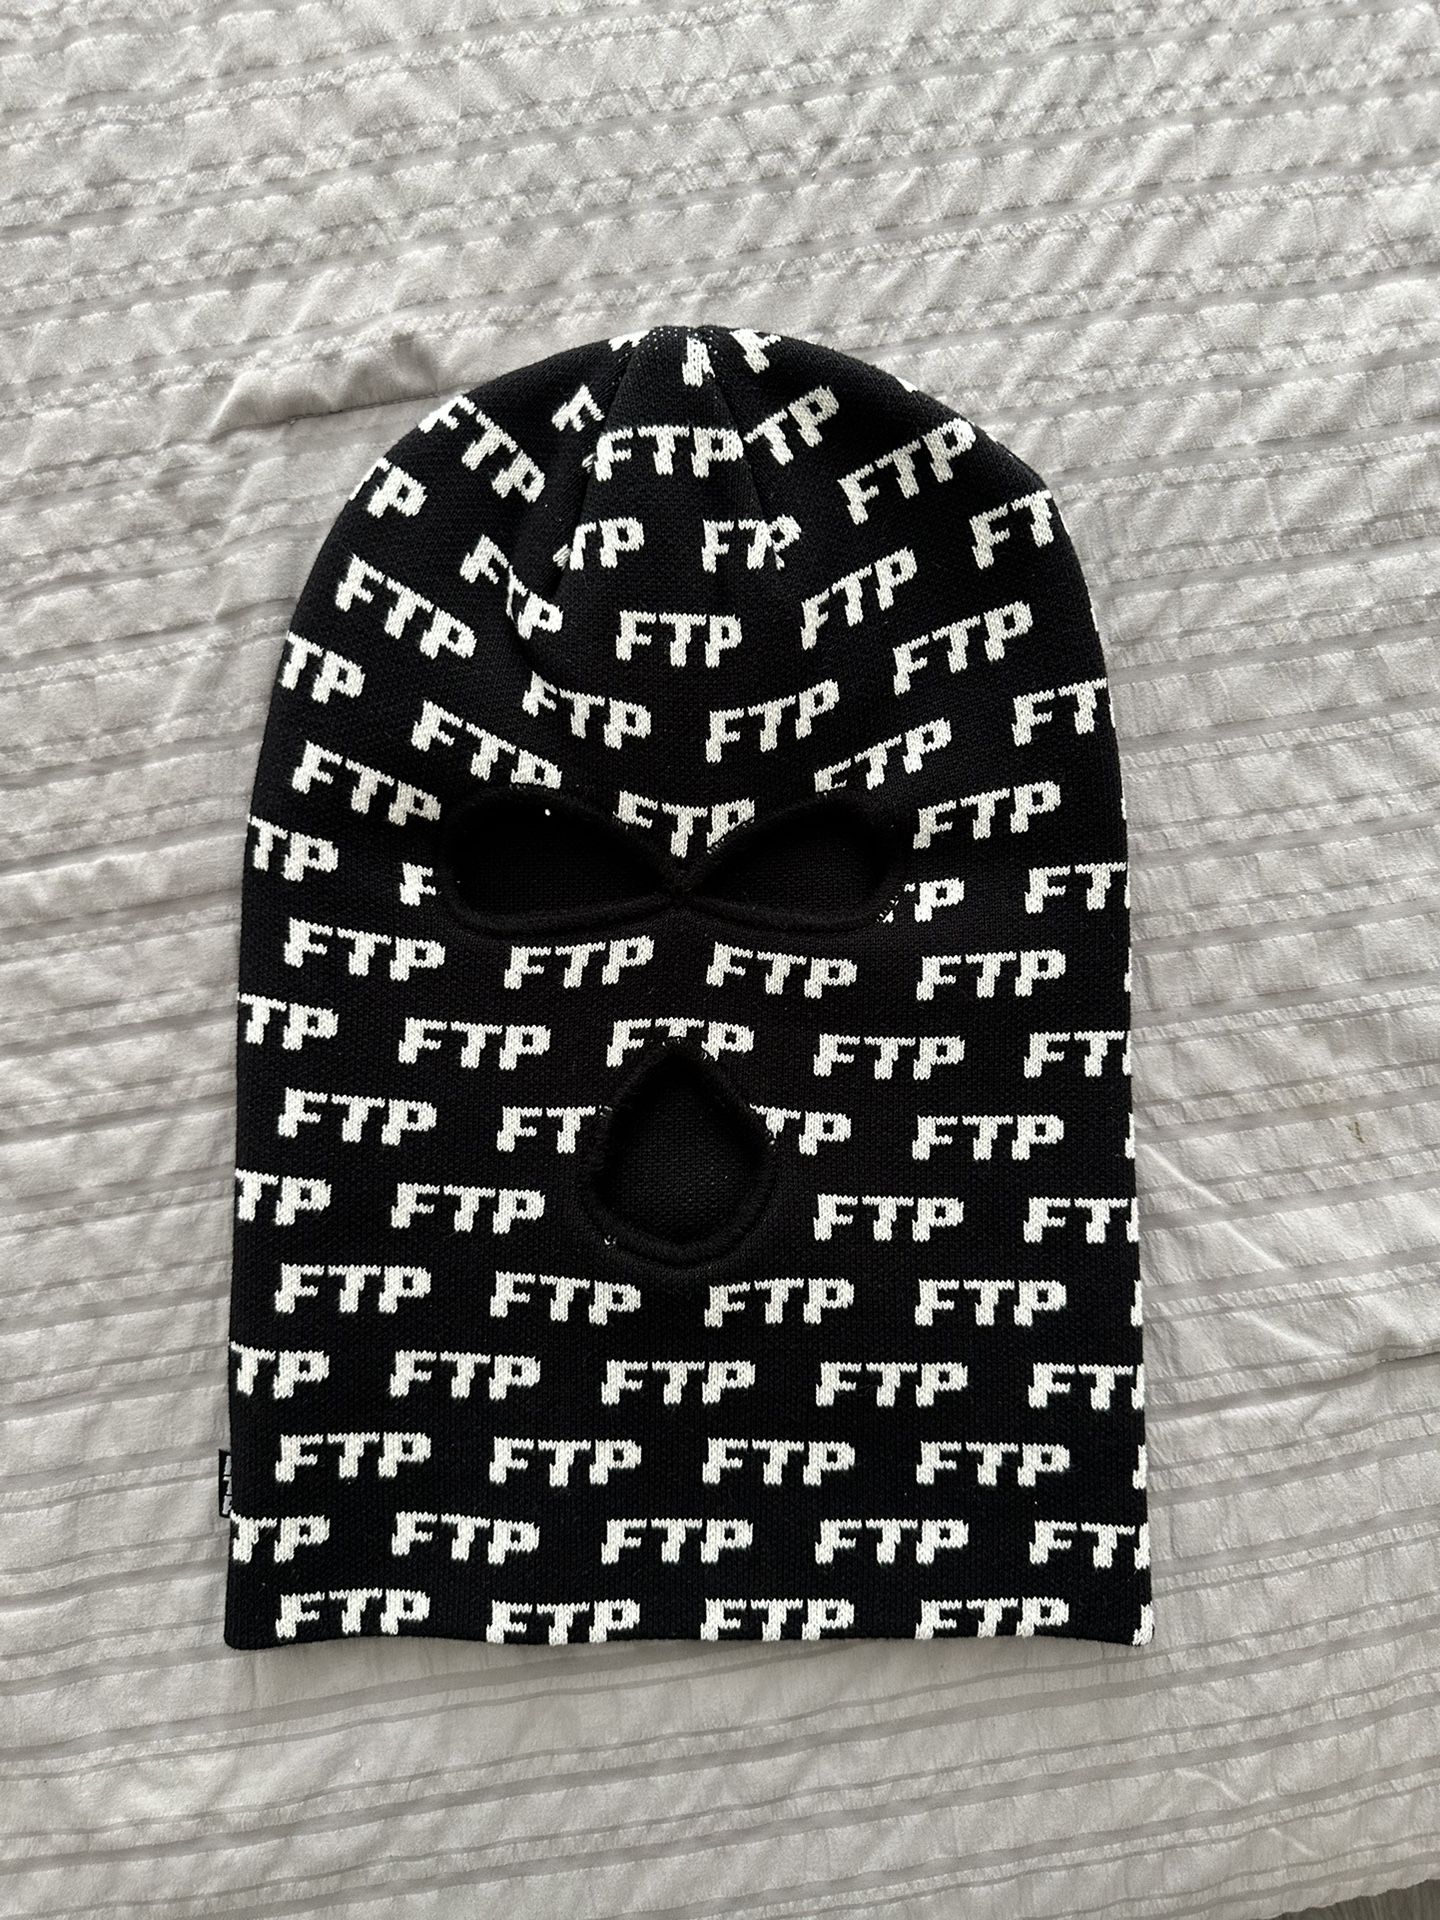 FTP Ski Mask 